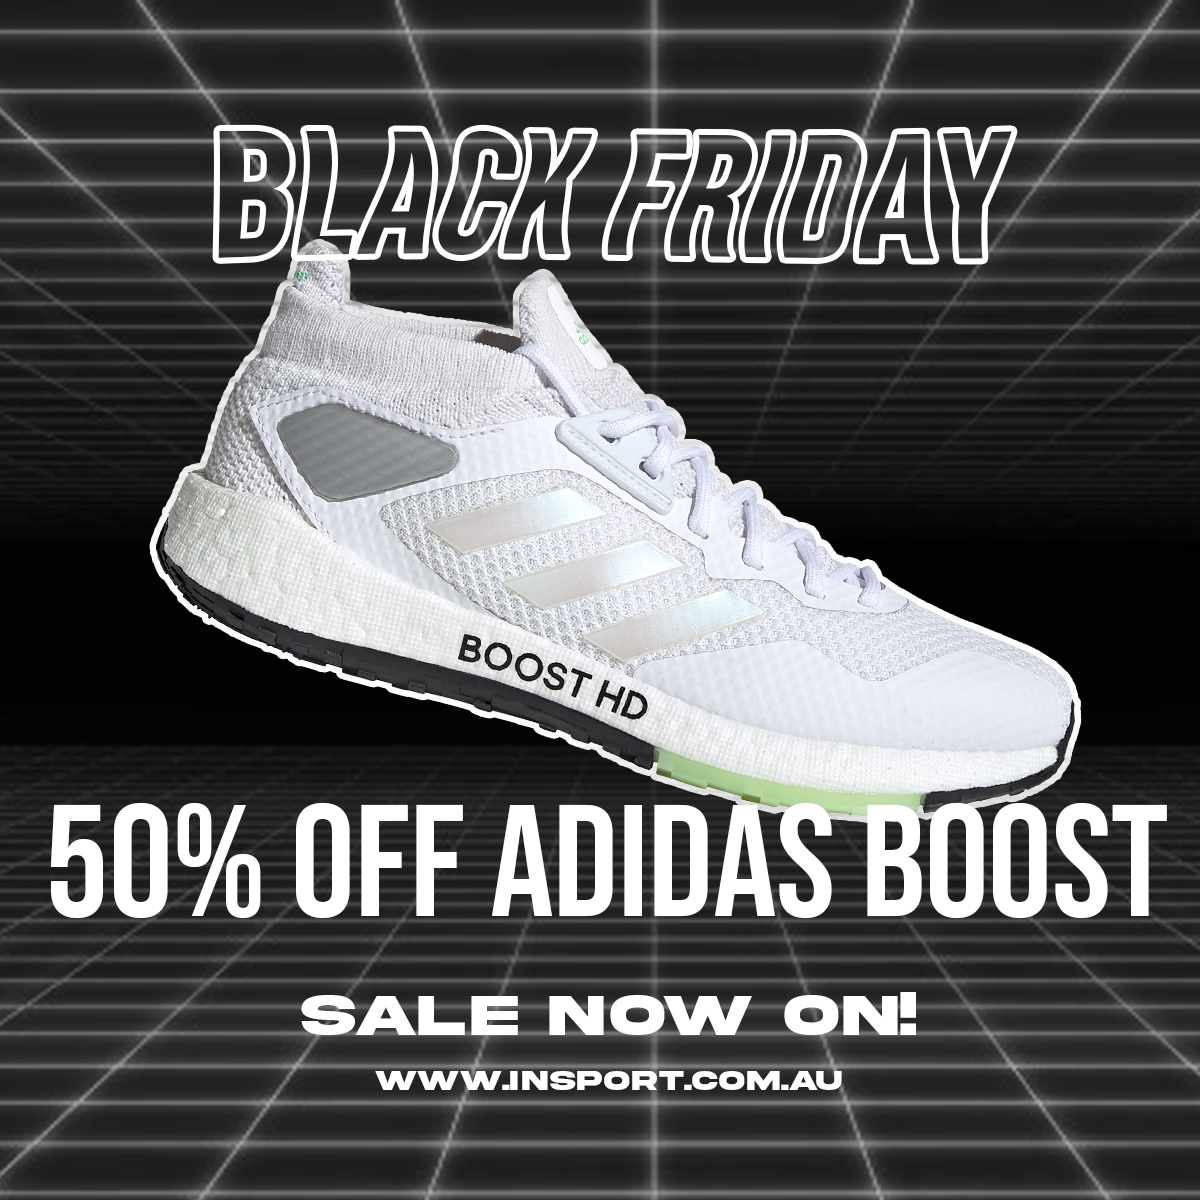 adidas australia black friday sale